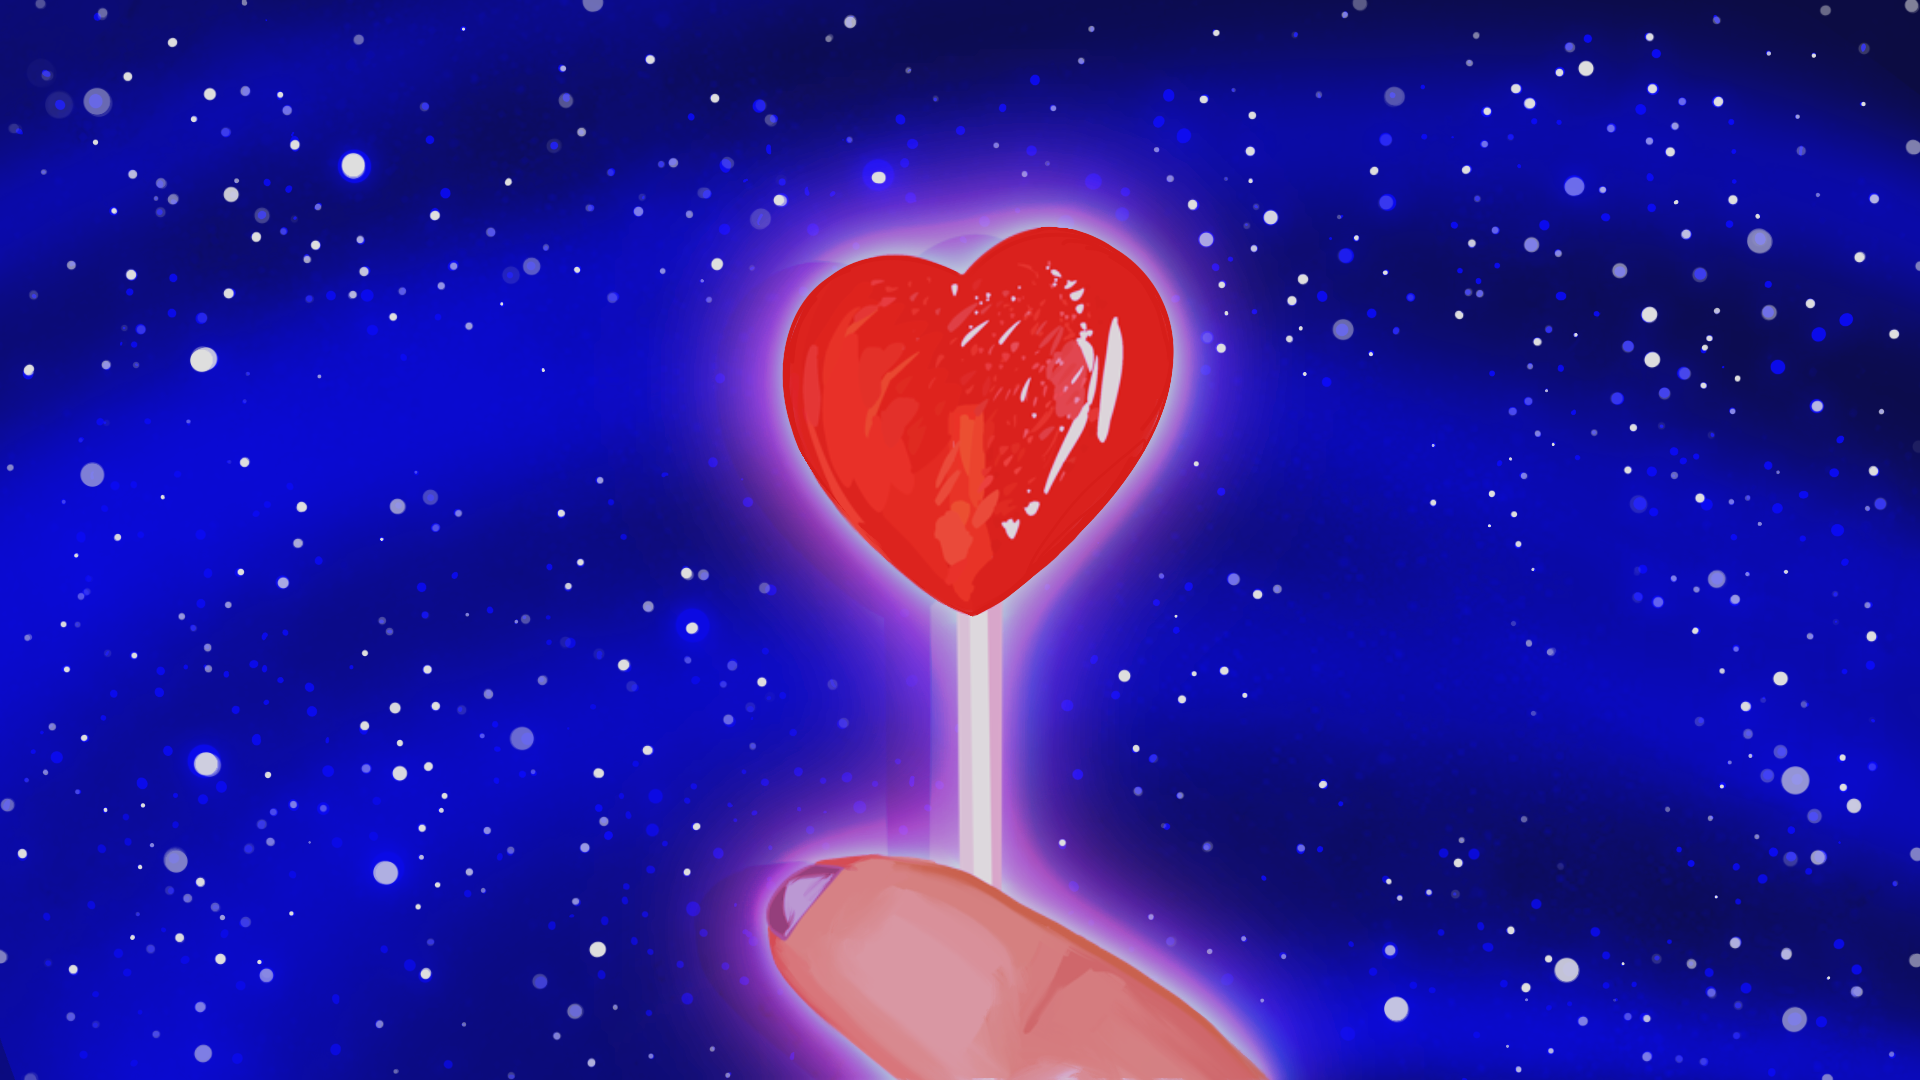 Image of a heart shaped lollipop 